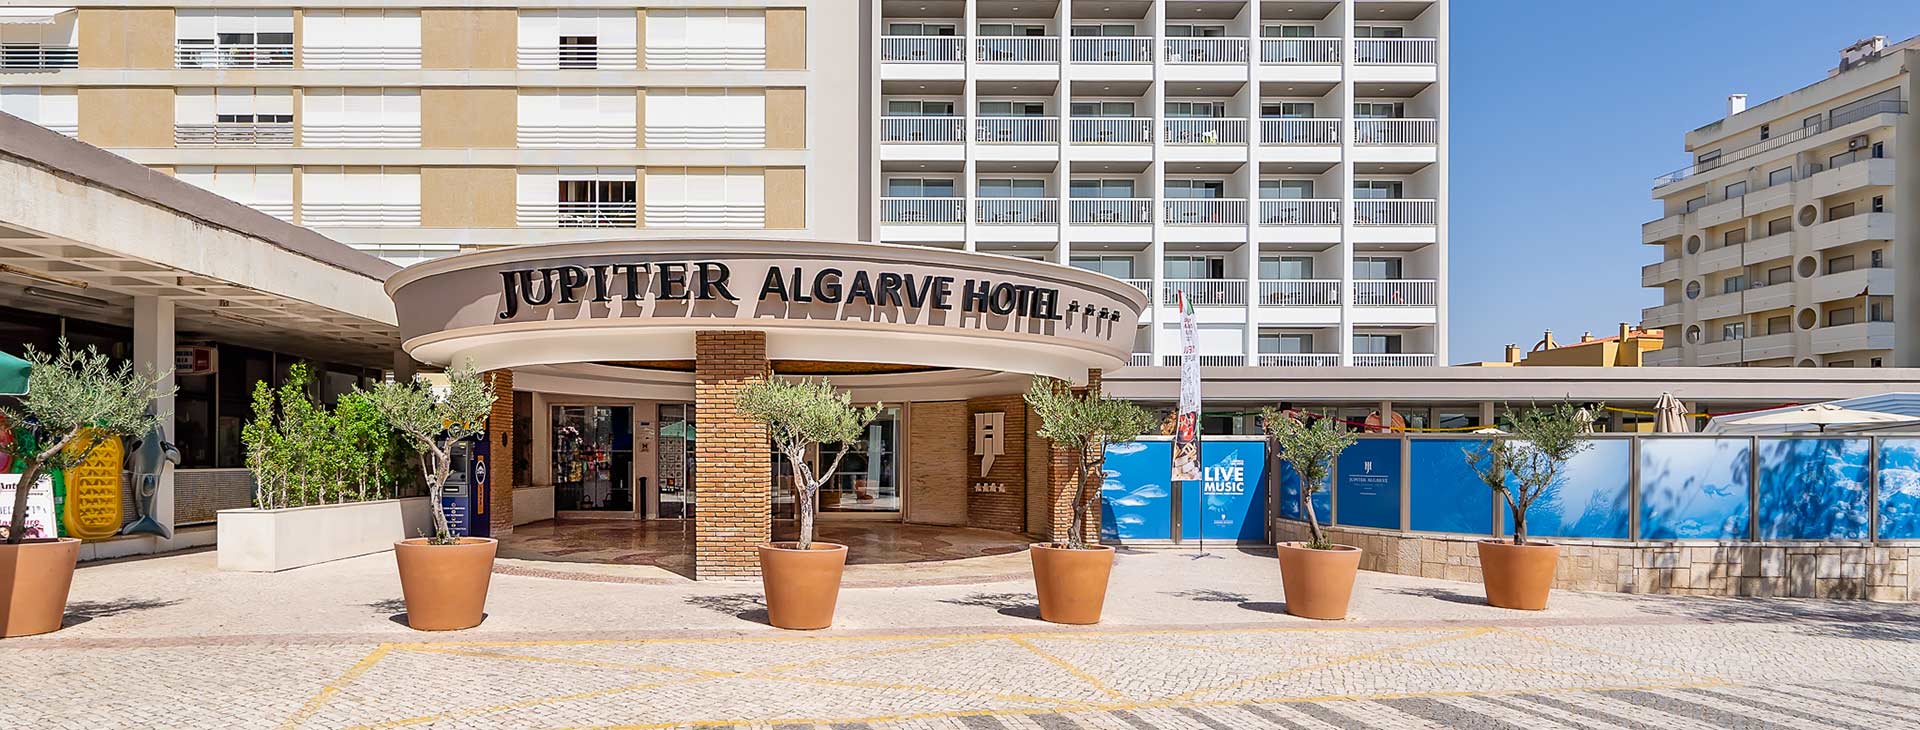 Jupiter Algarve Hotel Obrázek15